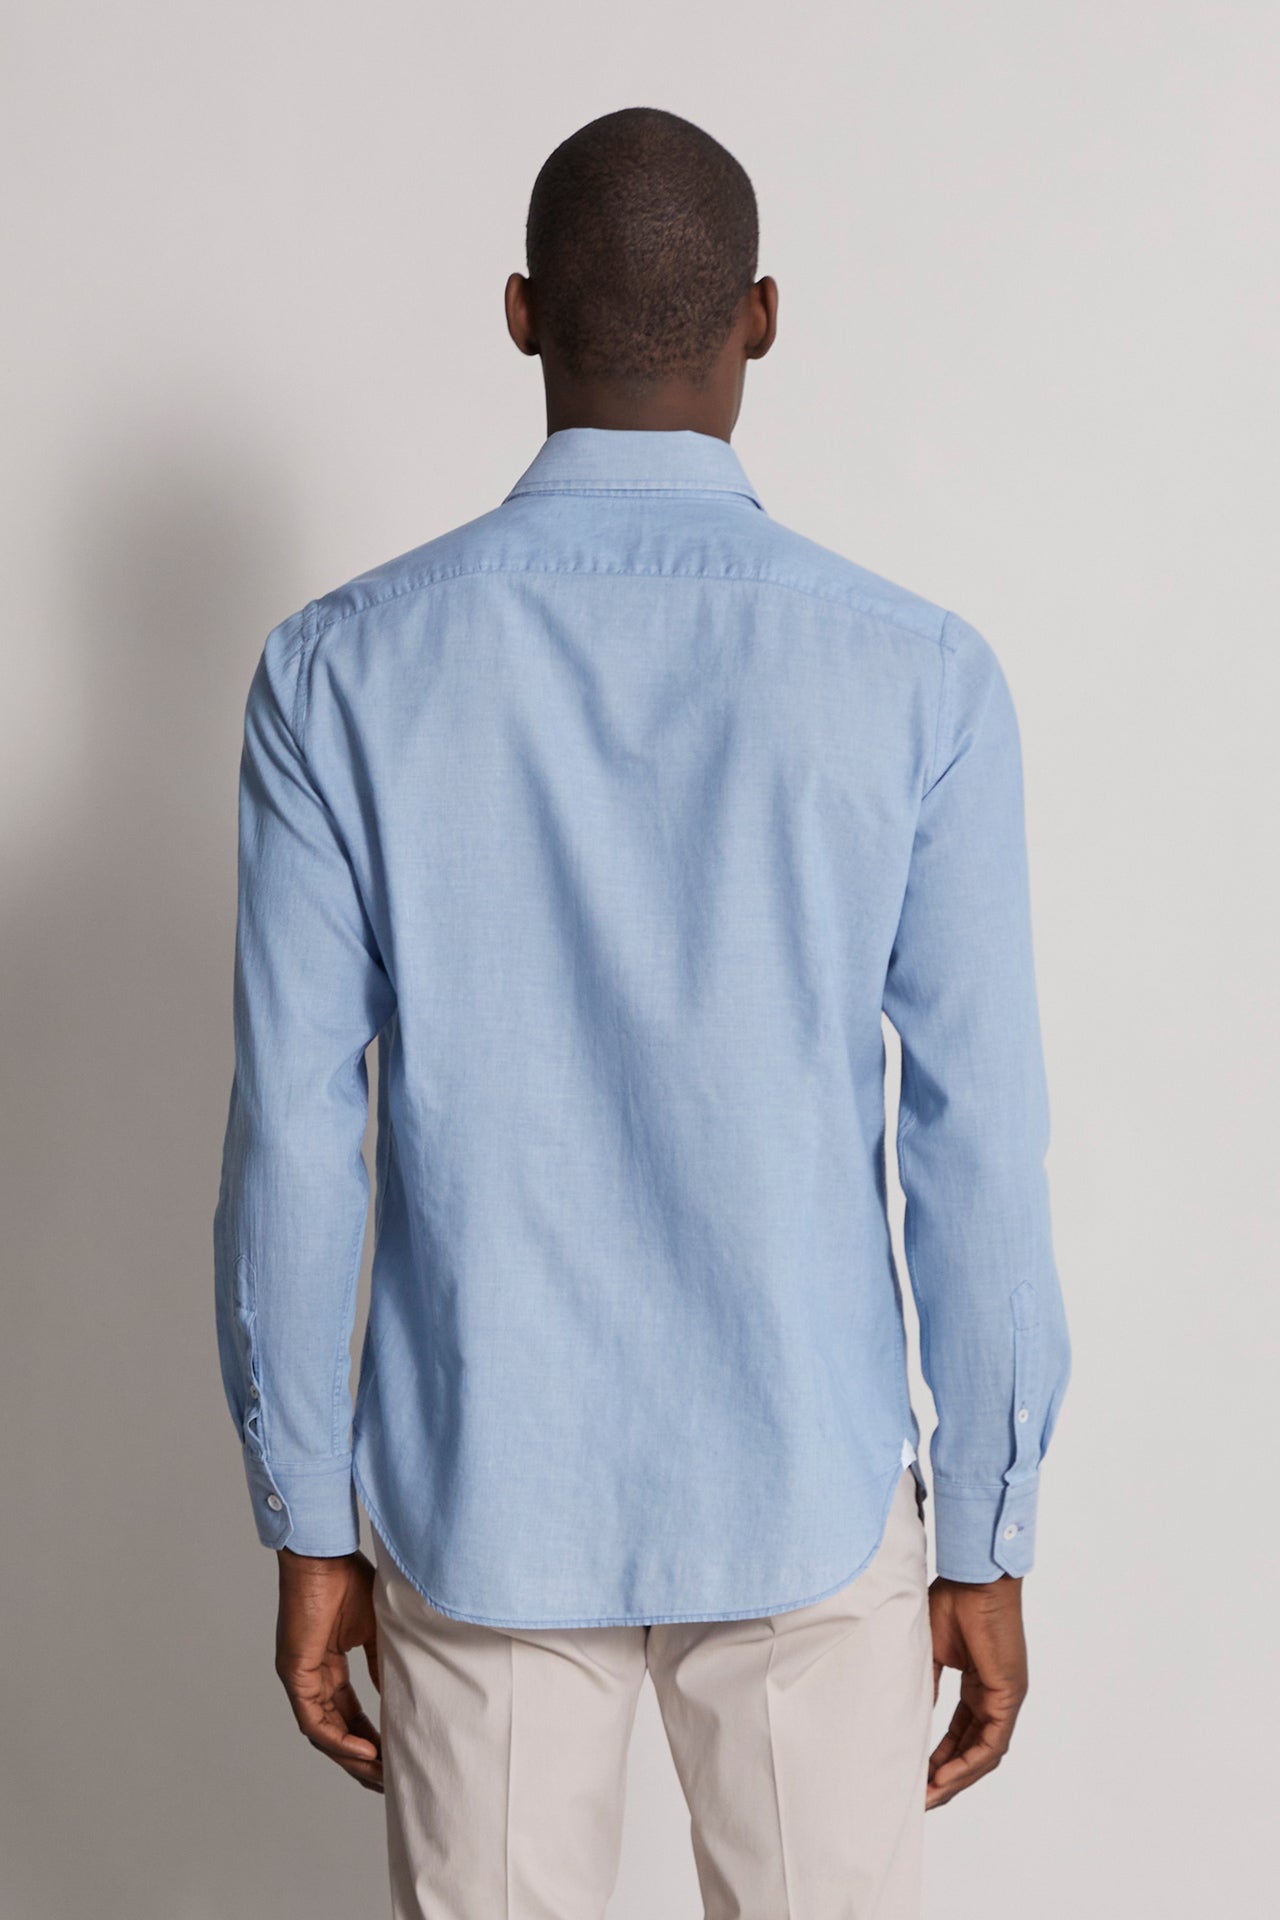 men's designer denim shirt with long sleeves in steel blue - back view